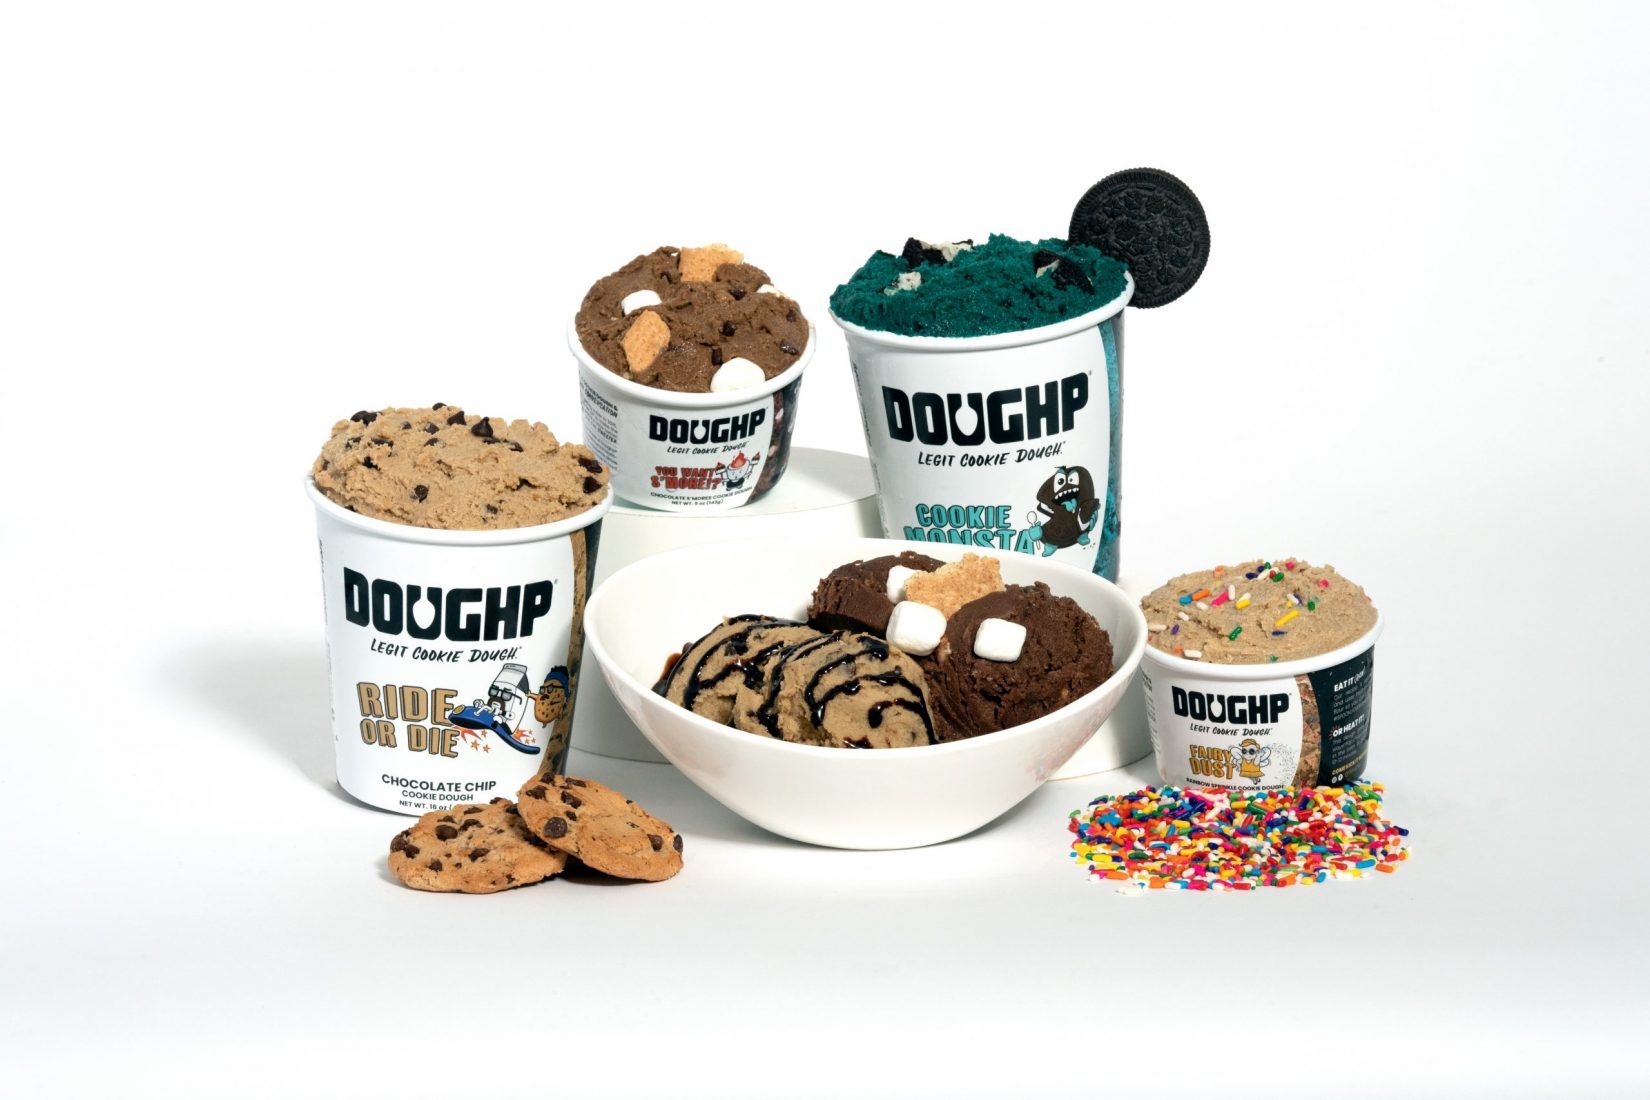 Cookie dough company Doughp